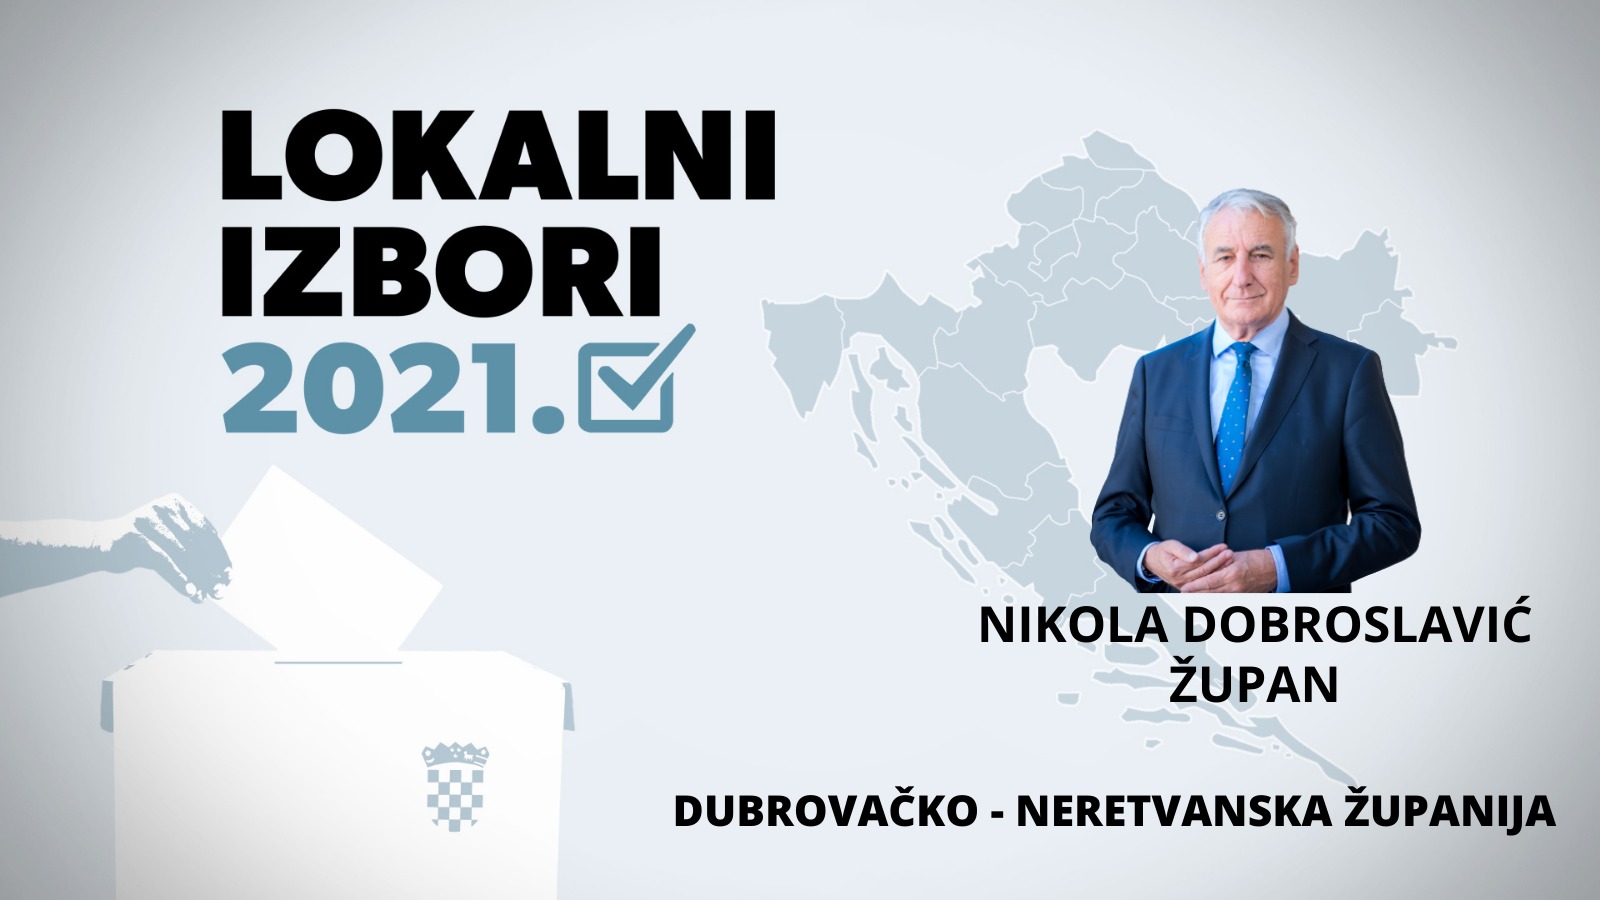 Nikola Dobroslavić